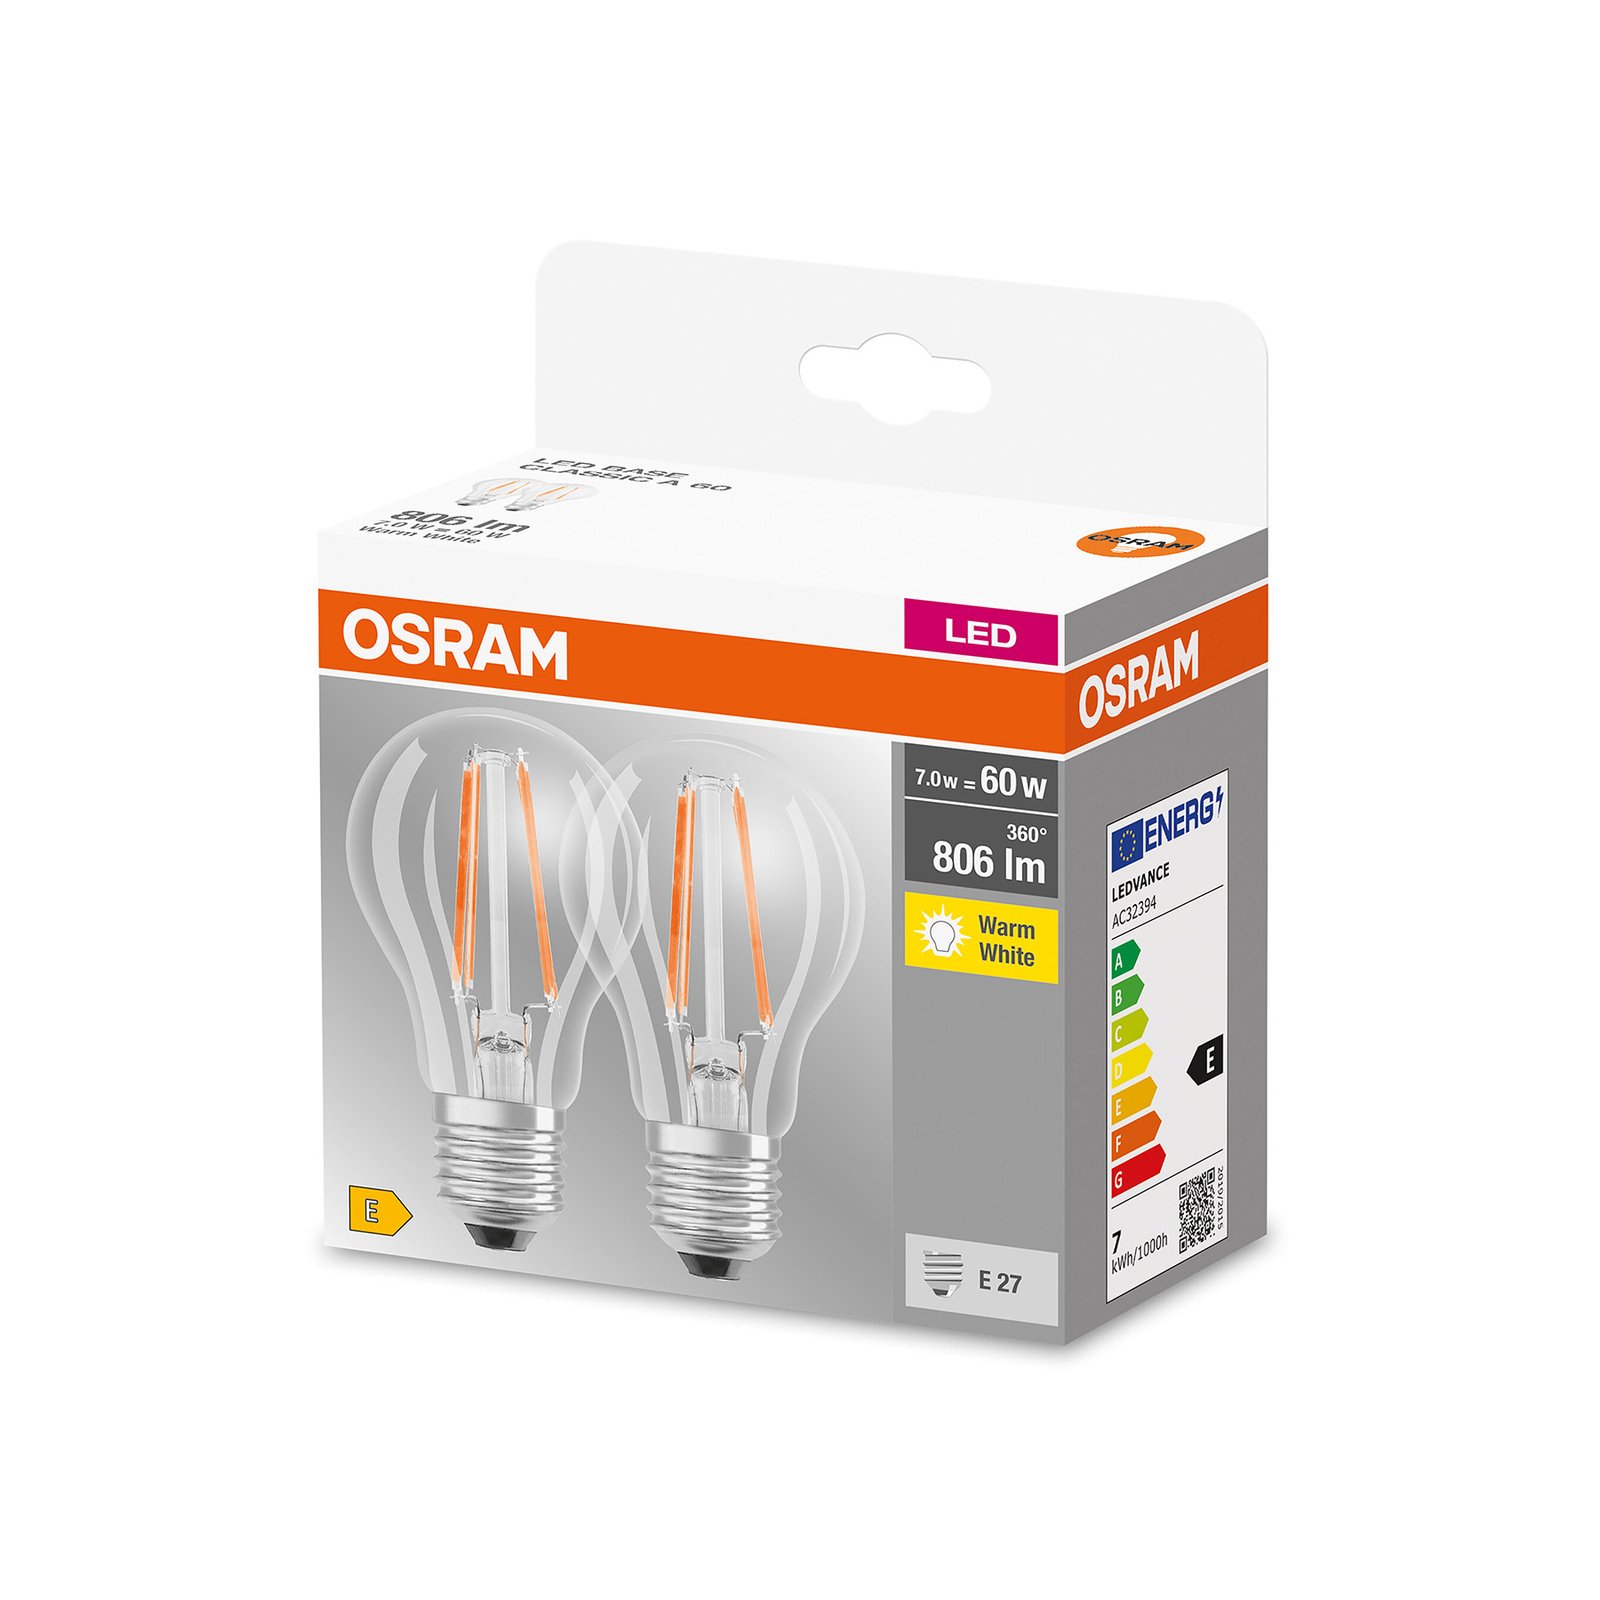 OSRAM LED hõõglamp E27 6,5W 827 läbipaistev 2 tk komplektis